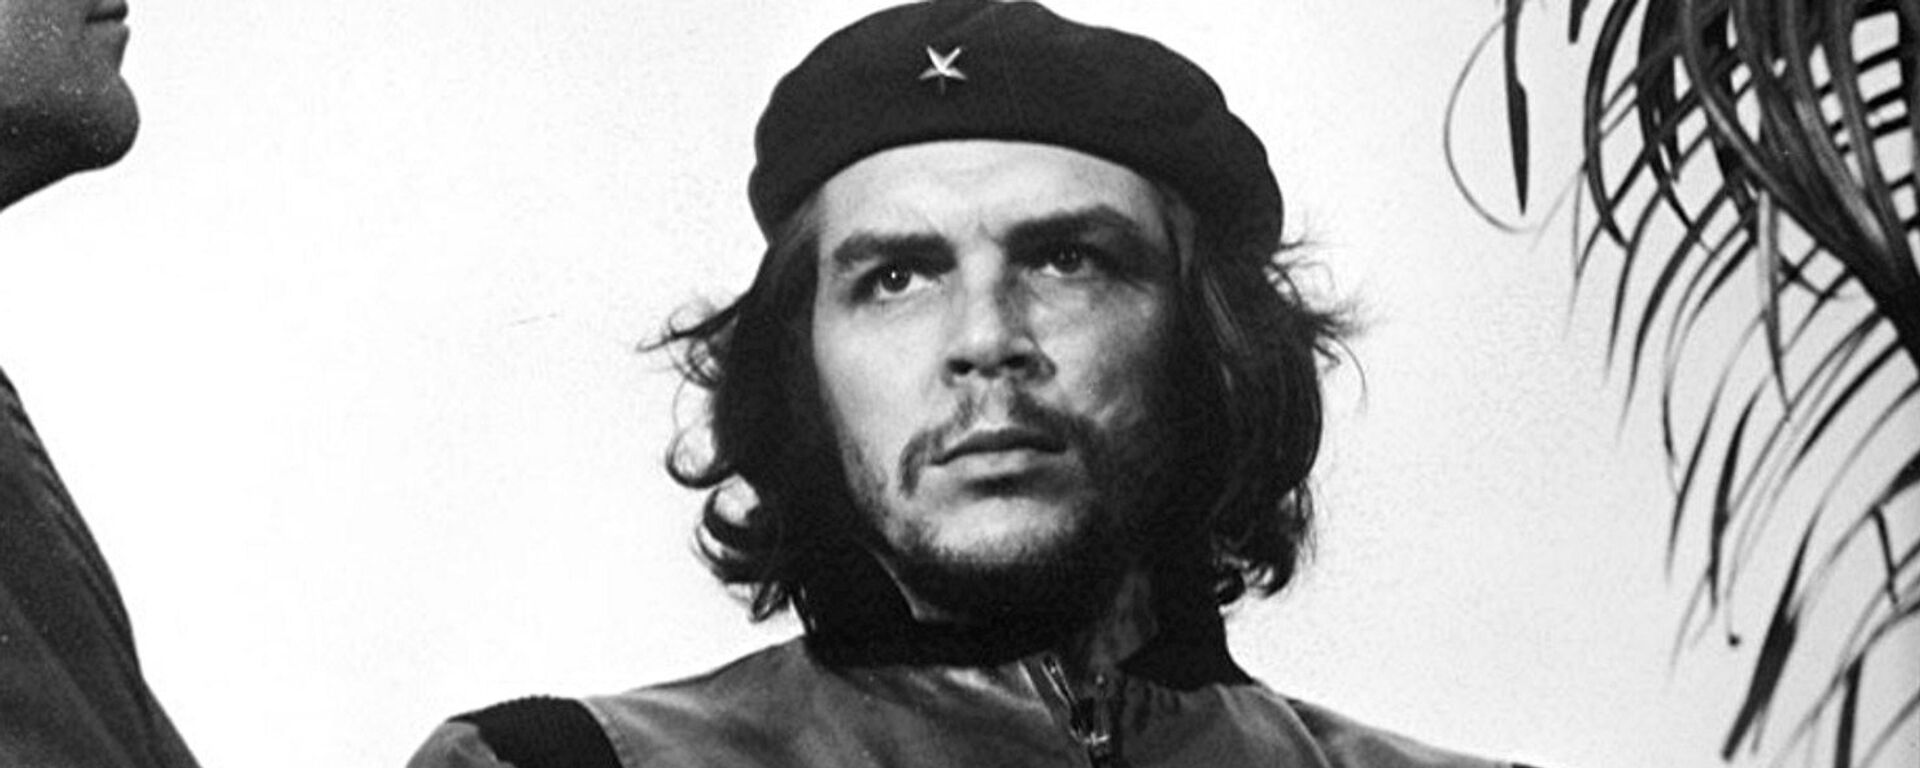 Comandante Ernesto Che Guevara, revolucionario cubano - Sputnik Mundo, 1920, 05.03.2019